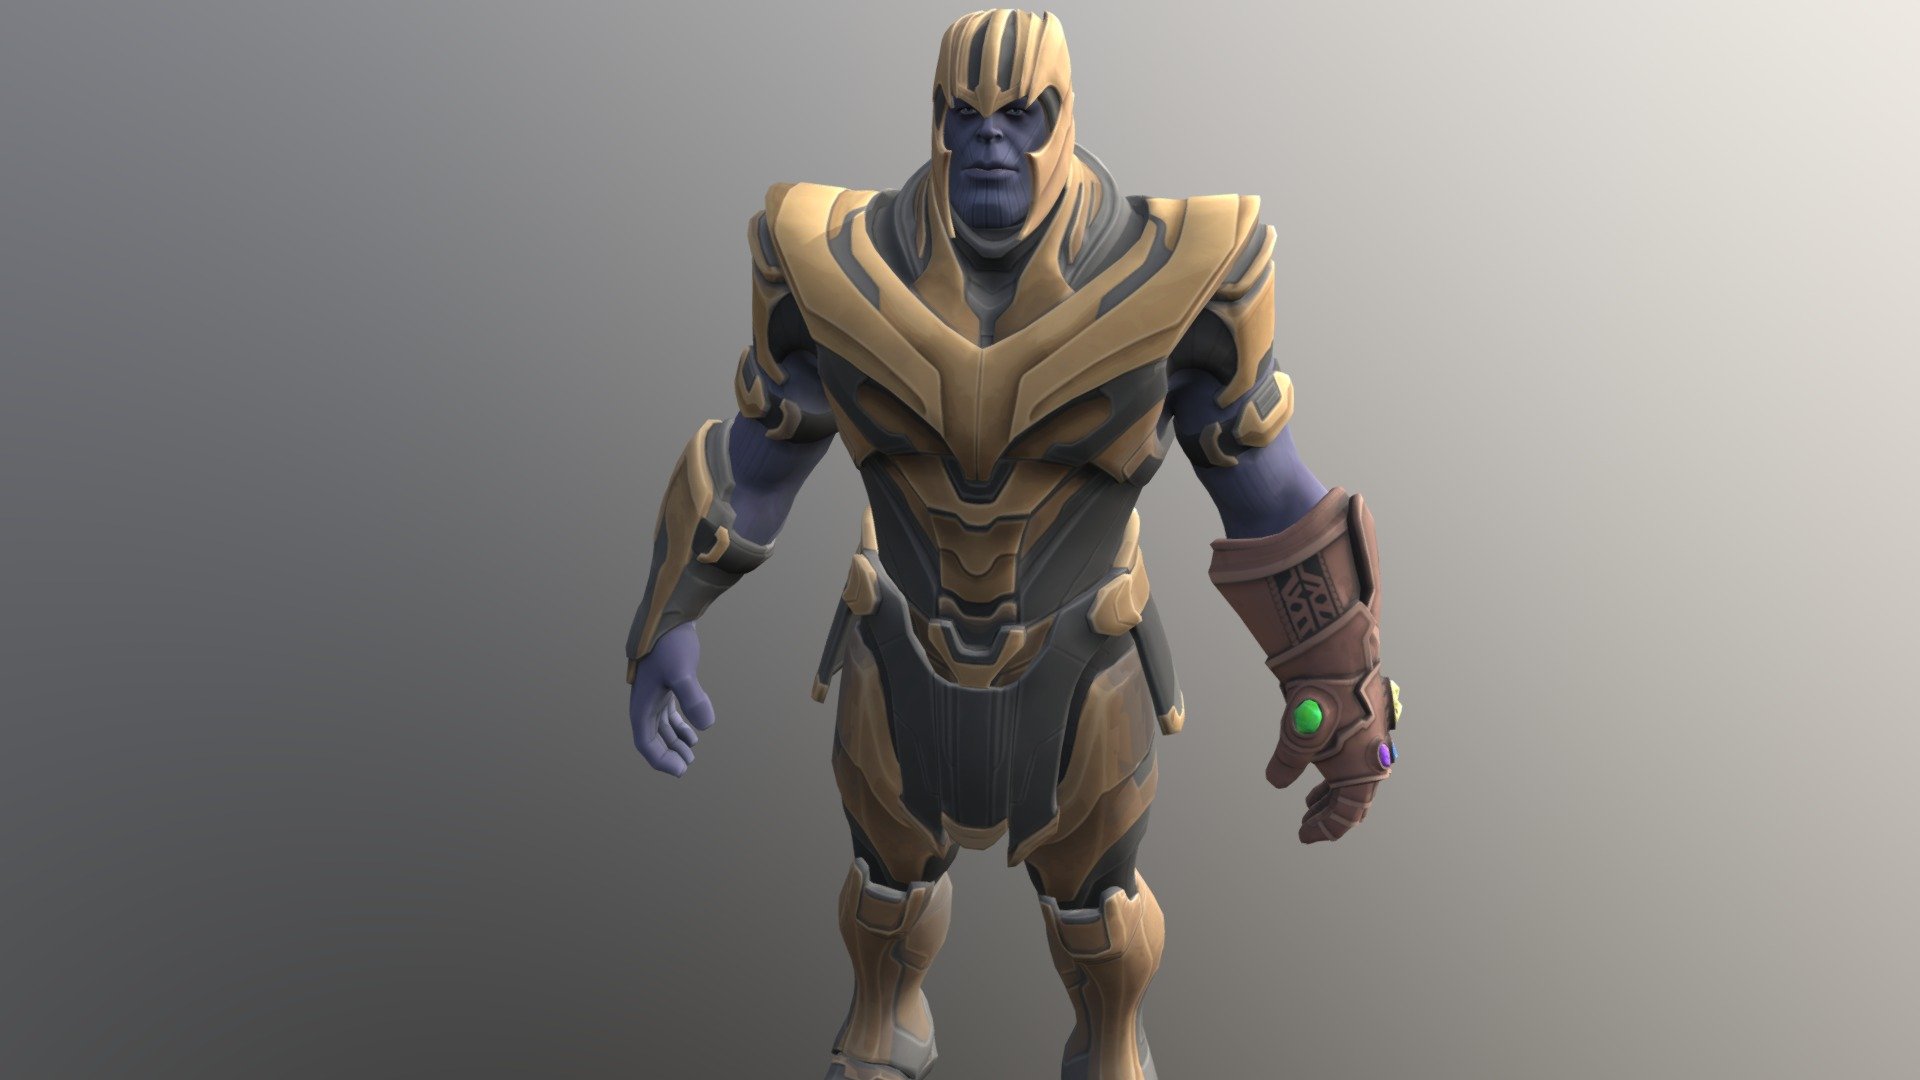 51 HQ Images Fortnite Thanos Game Download Fortnite